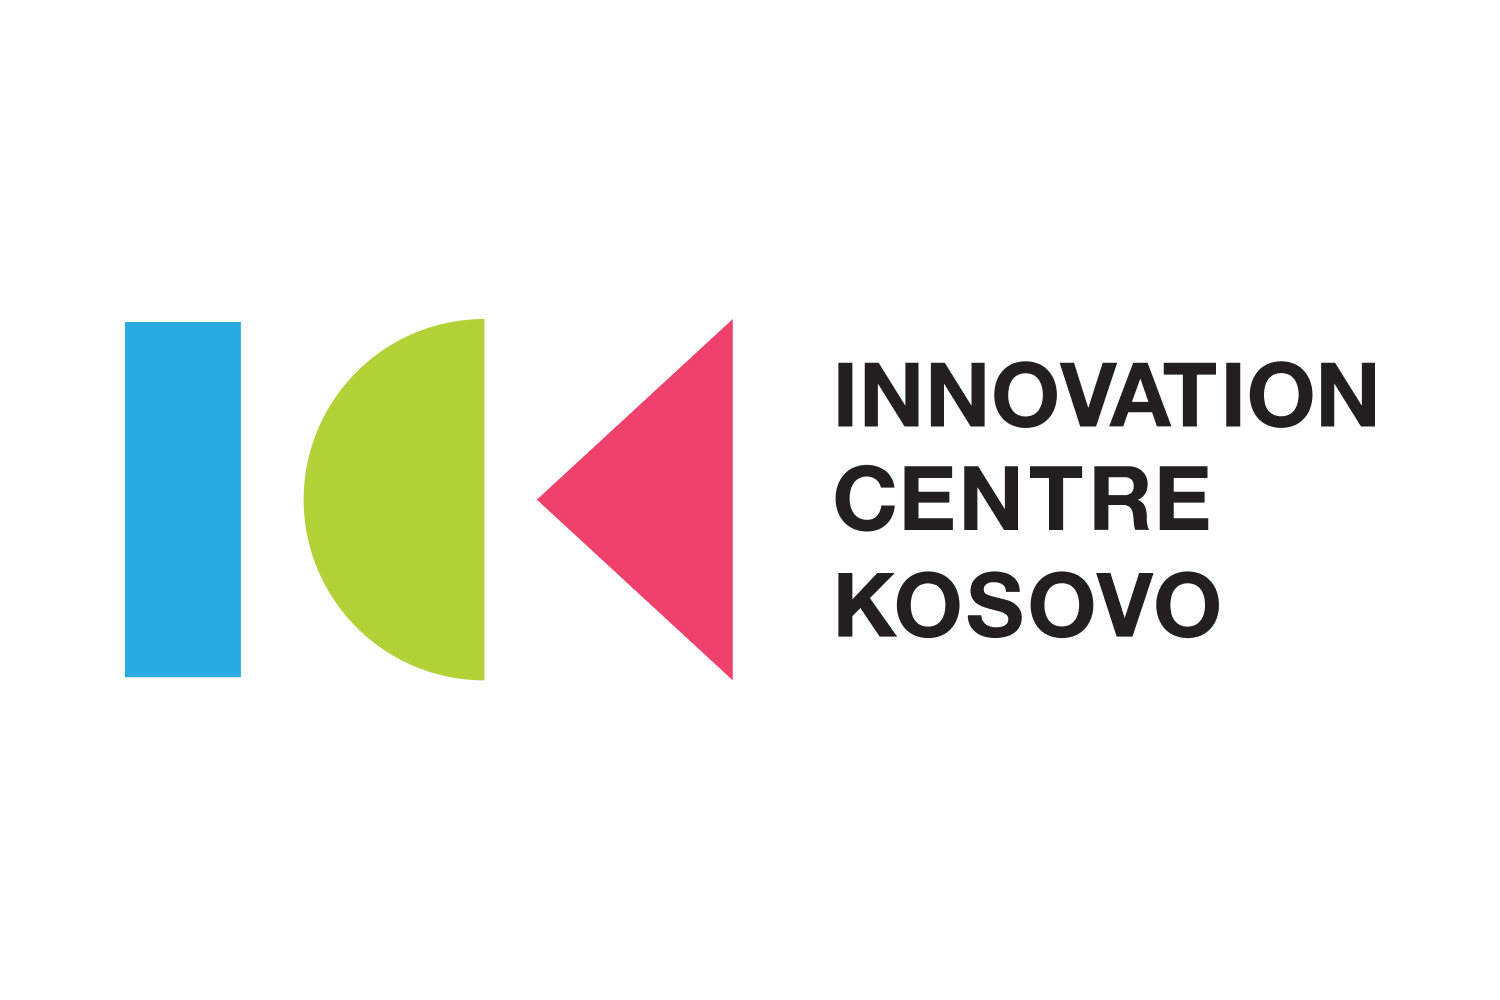 Innovation Centre Kosovo logo